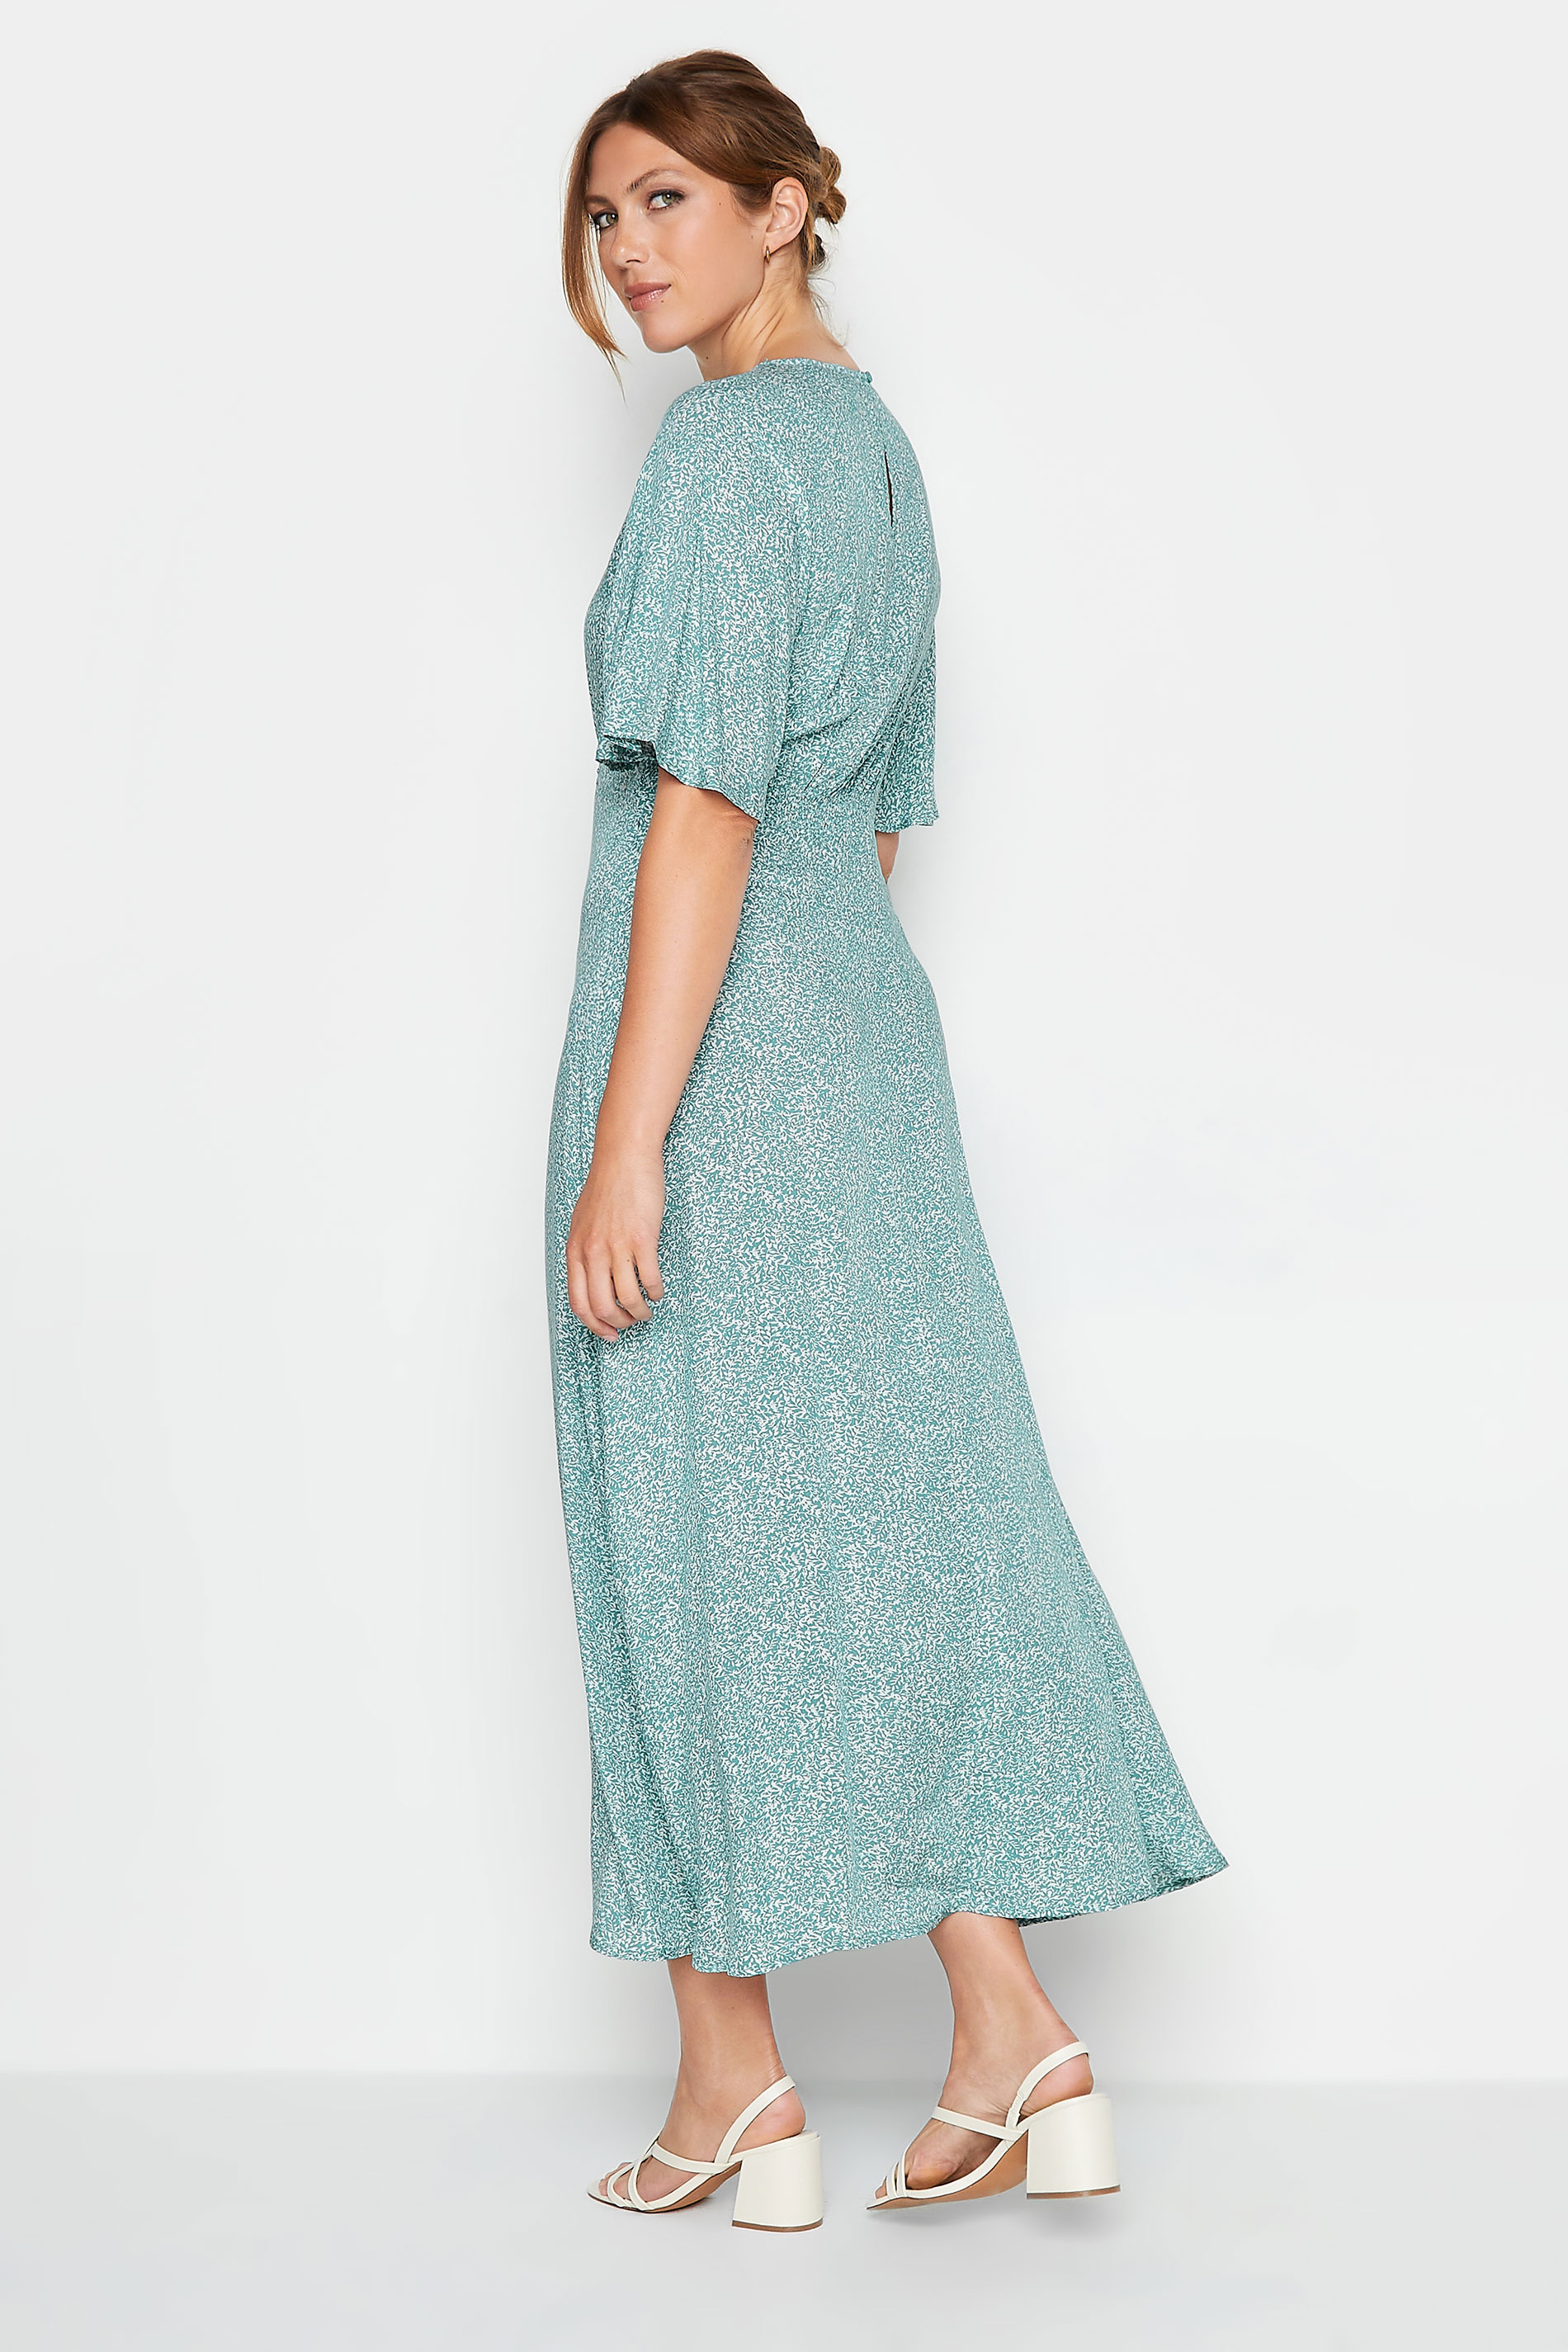 LTS Tall Women's Light Blue Floral Midi Dress | Long Tall Sally 3